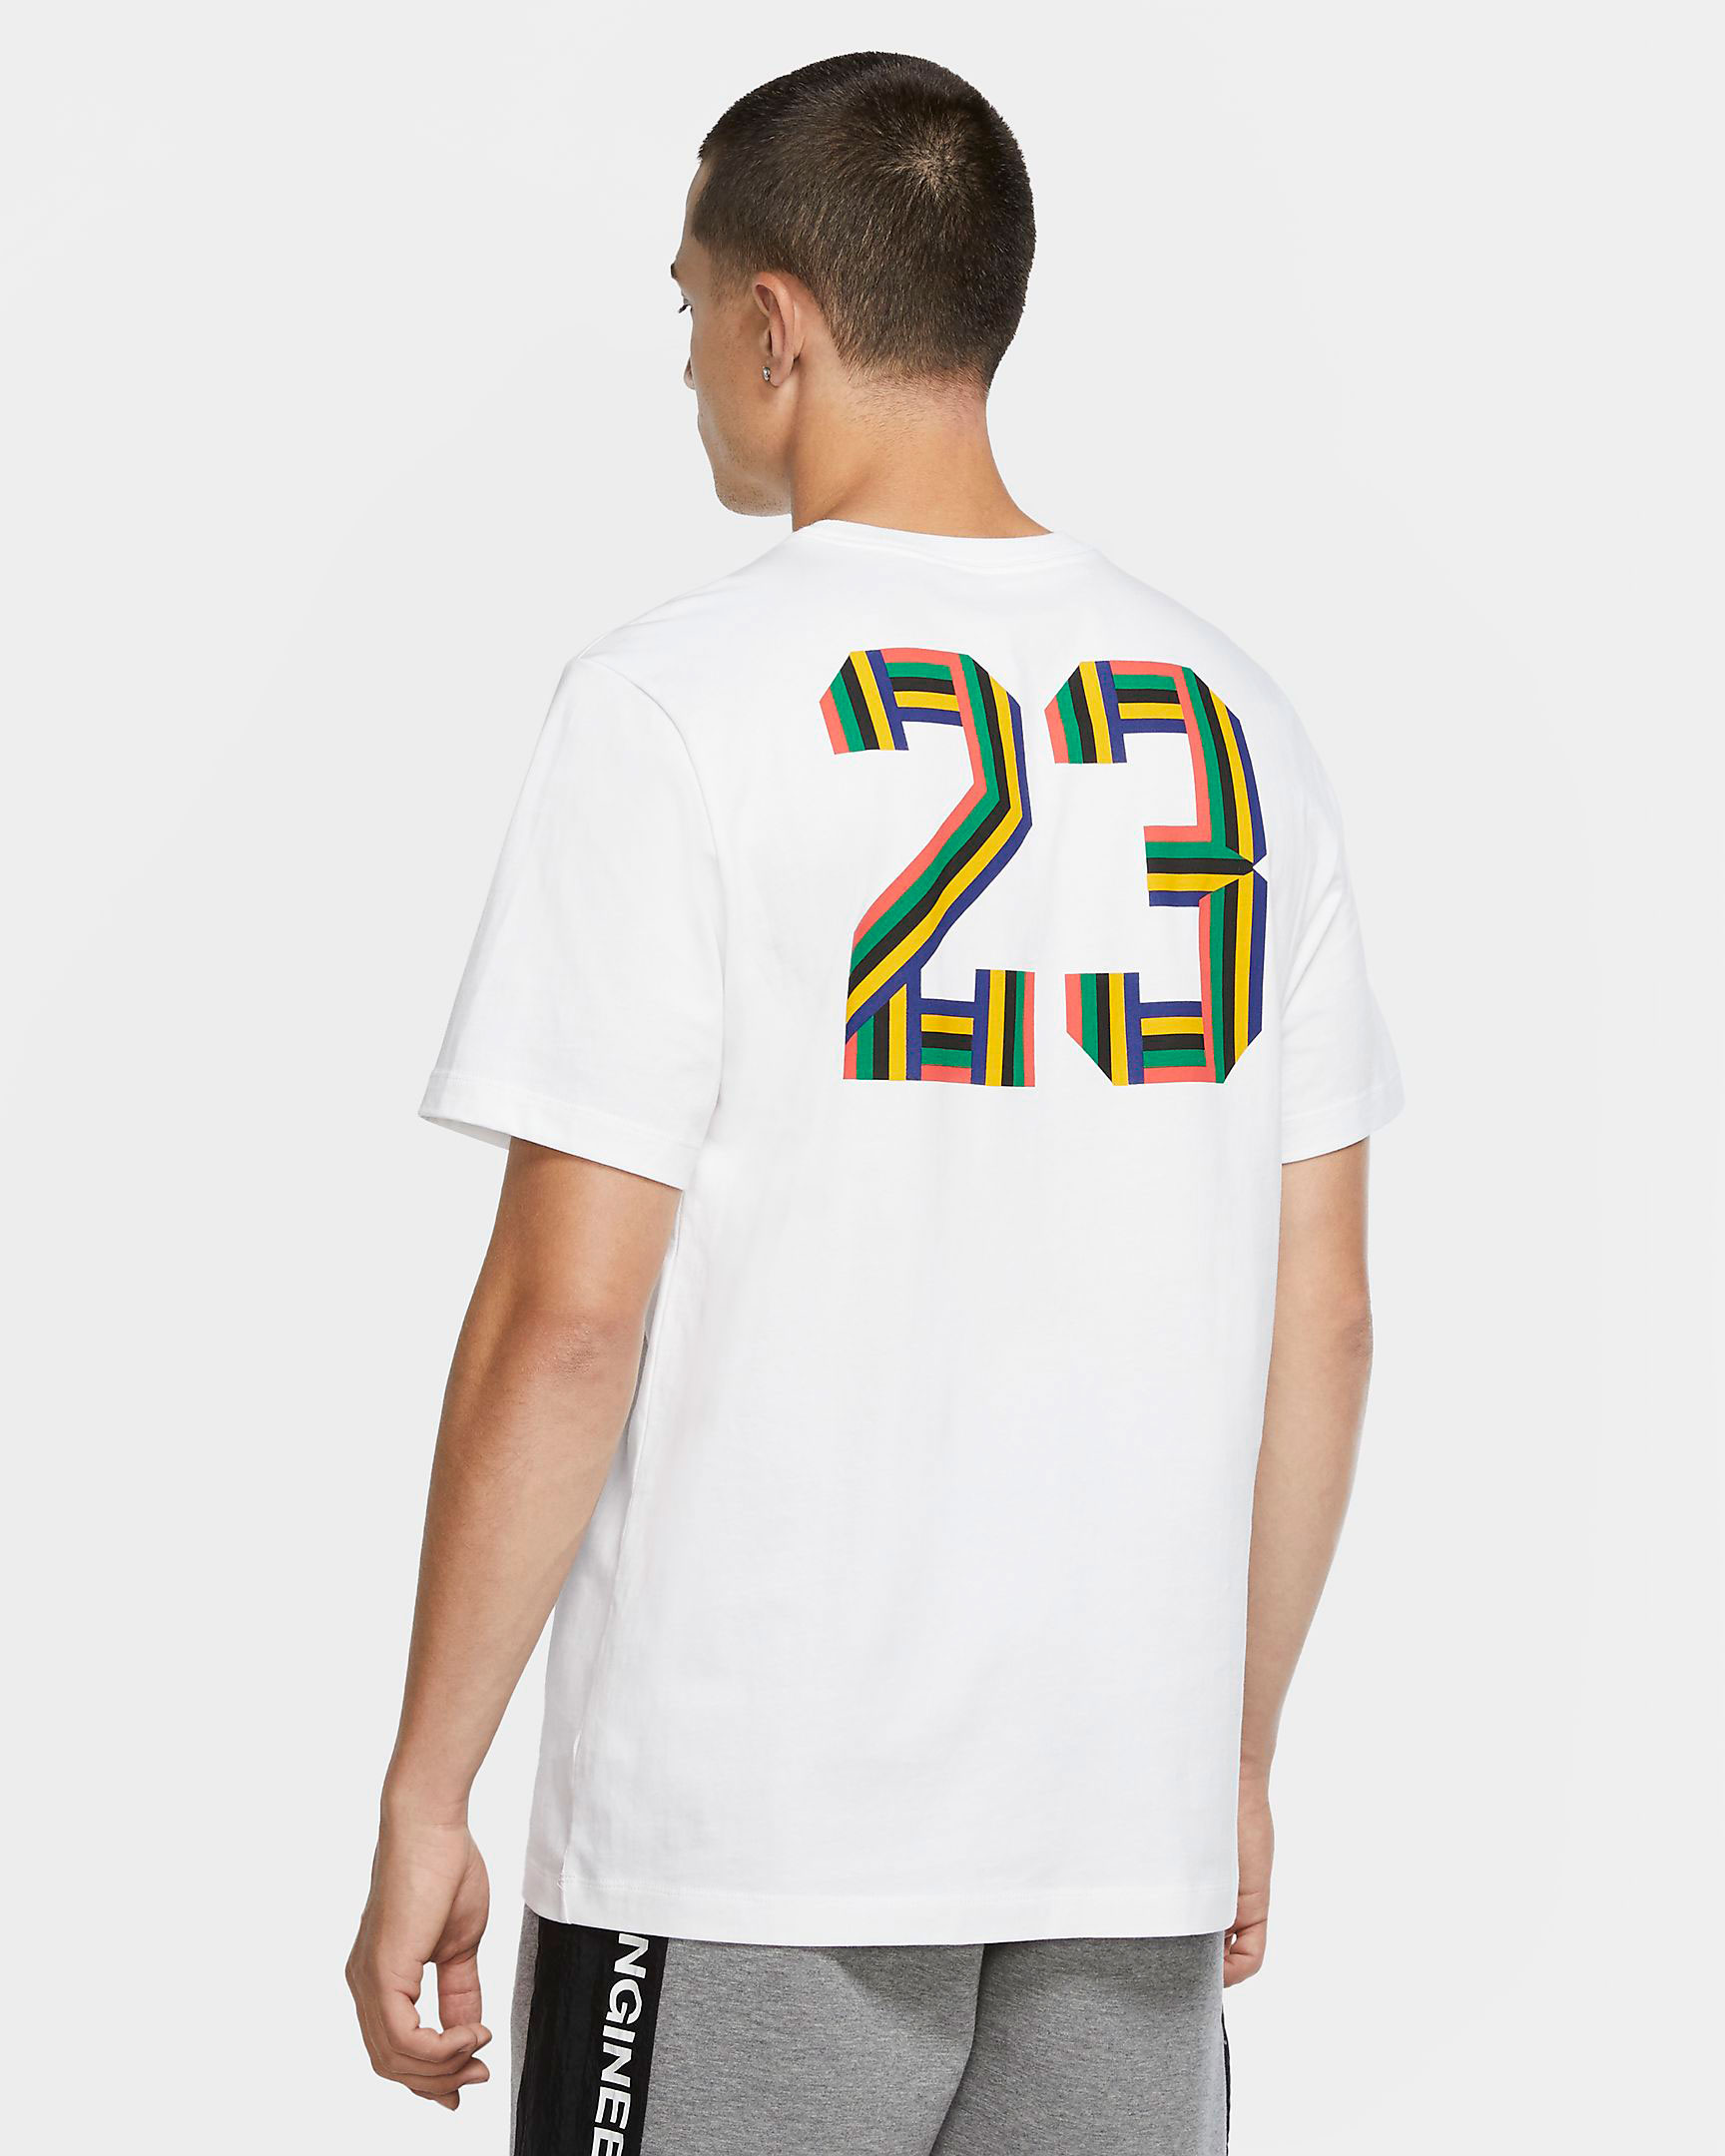 jordan-sport-dna-jumpman-shirt-white-multi-color-2